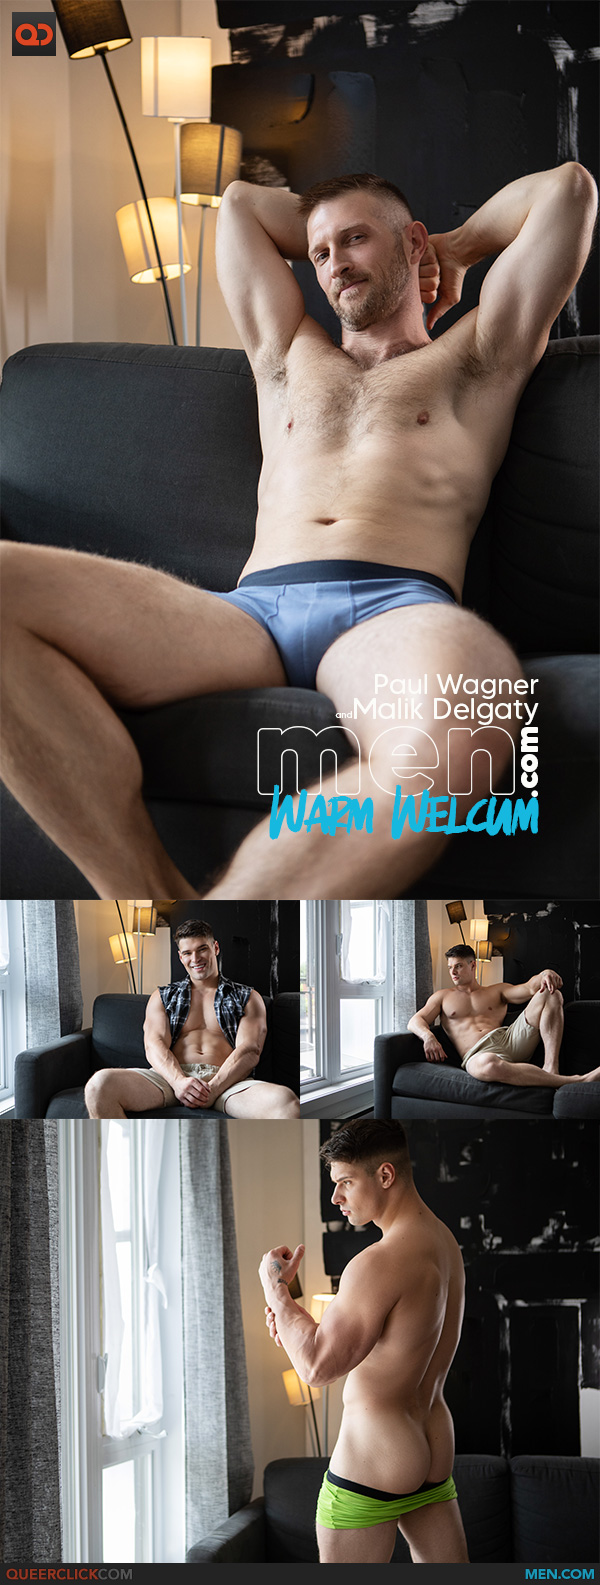 Men.com: Malik Delgaty and Paul Wagner - Warm Welcum